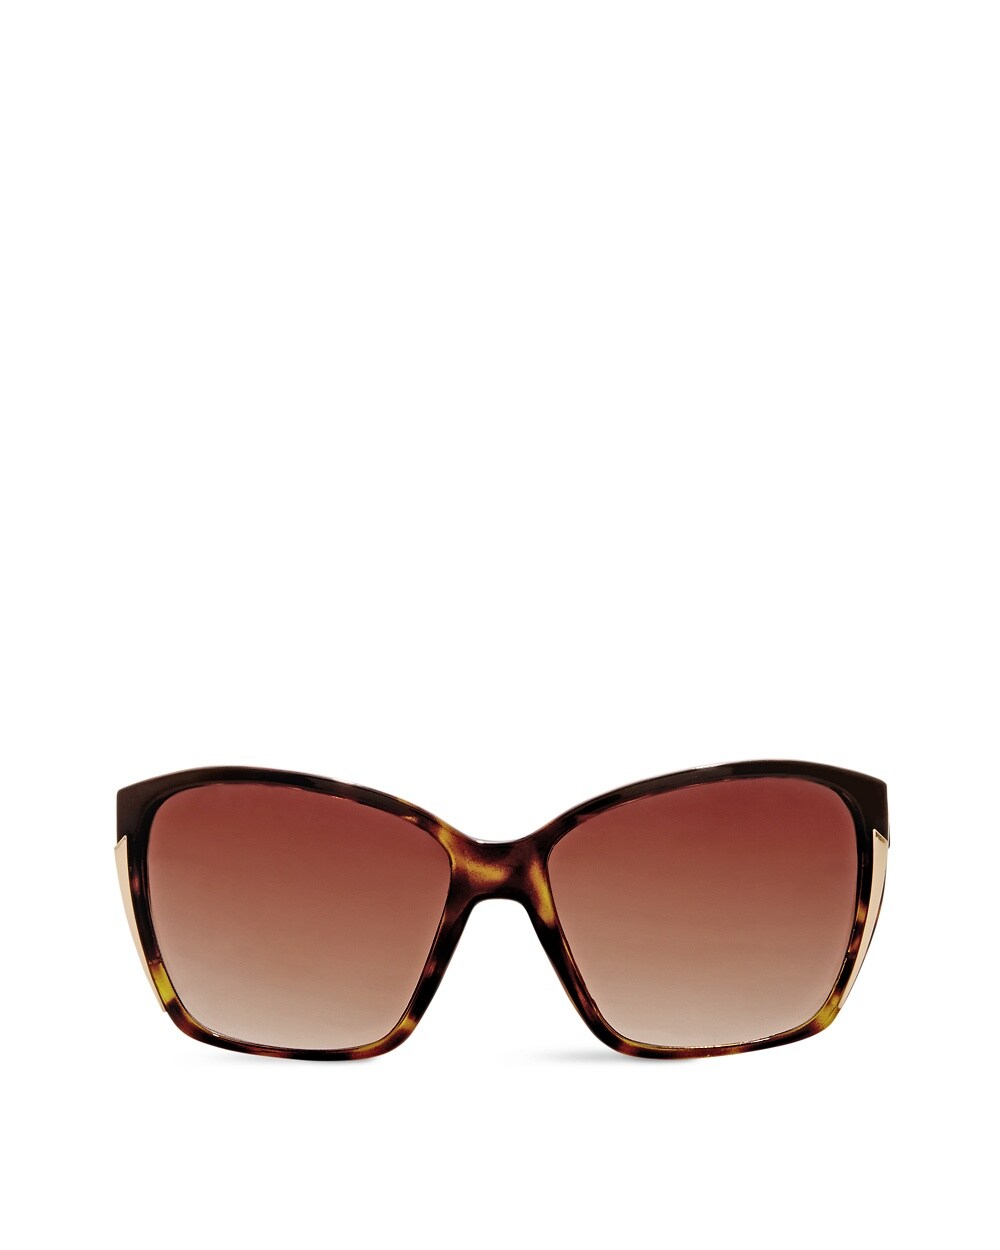 Estelle Tortoiseshell Sunglasses